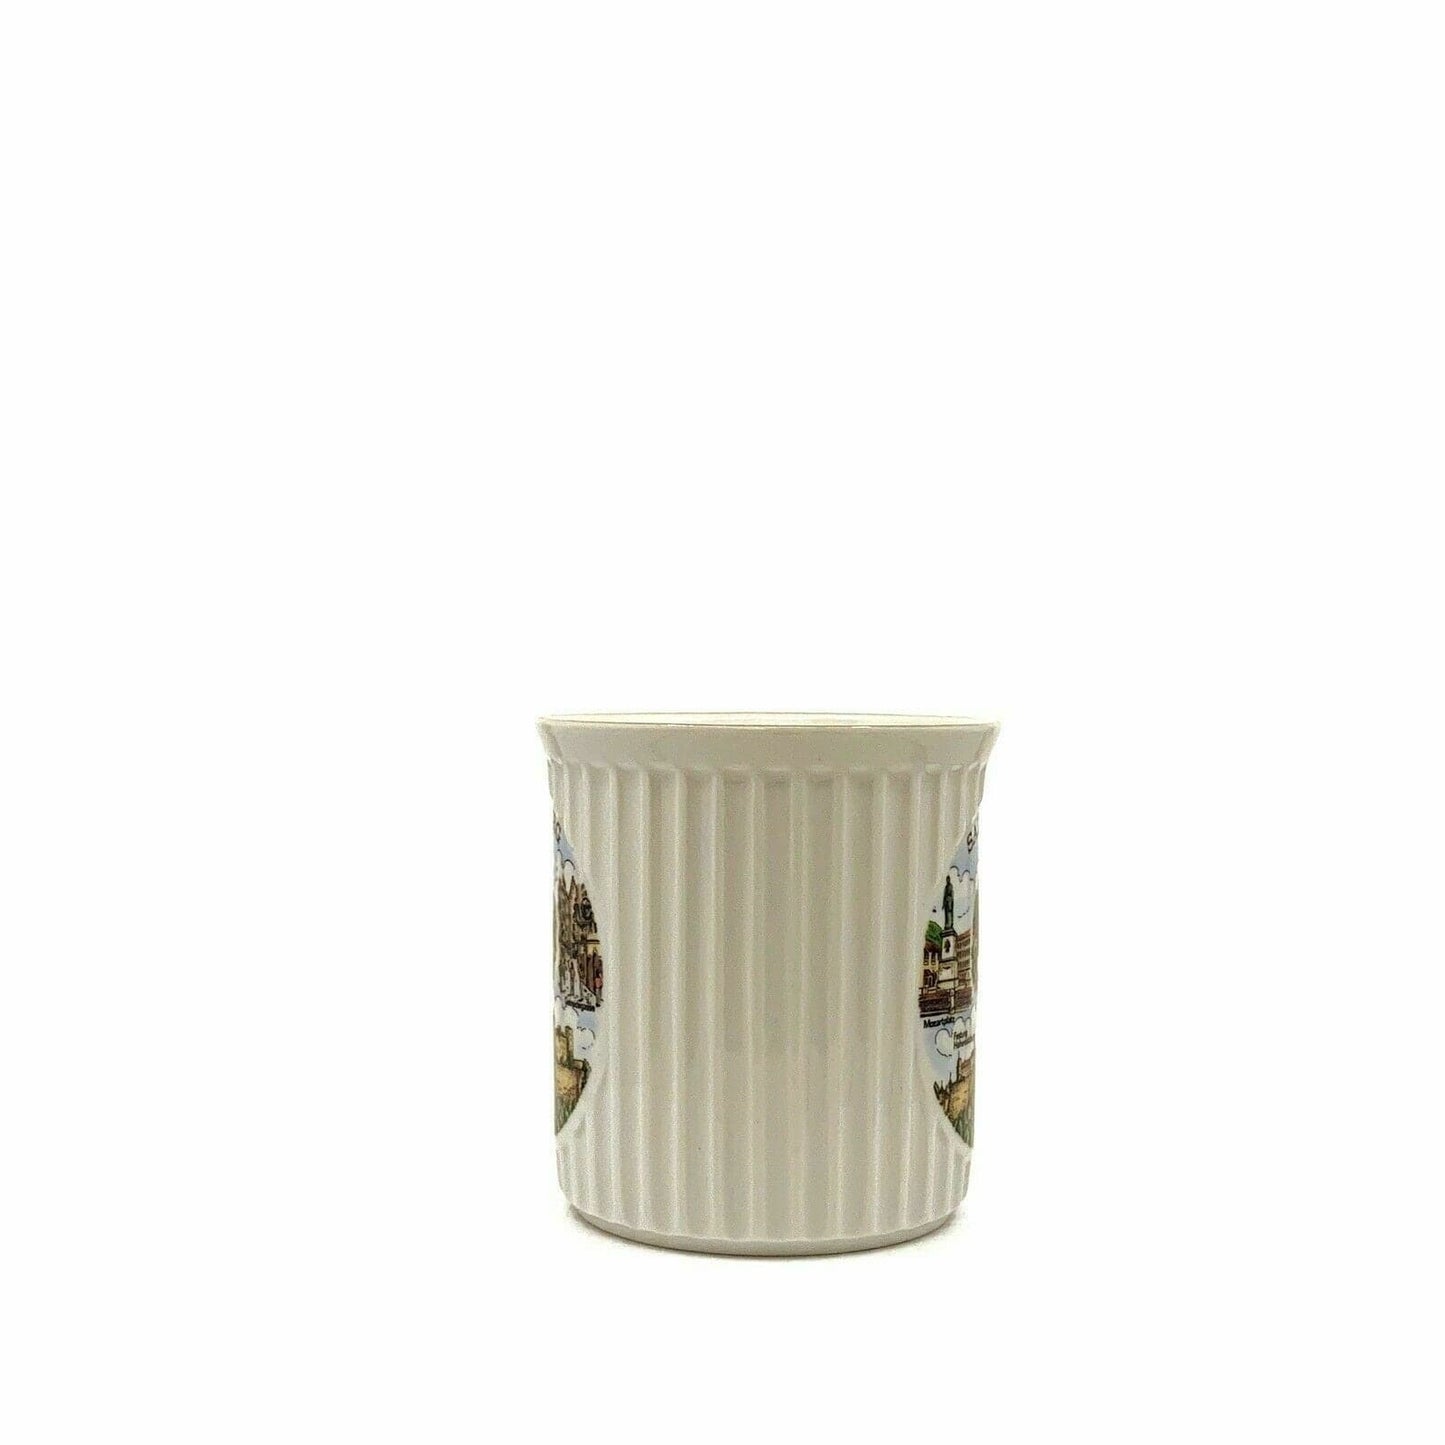 Charming Salzburg Austria Souvenir Coffee Tea Cup - 10oz White Porcelain